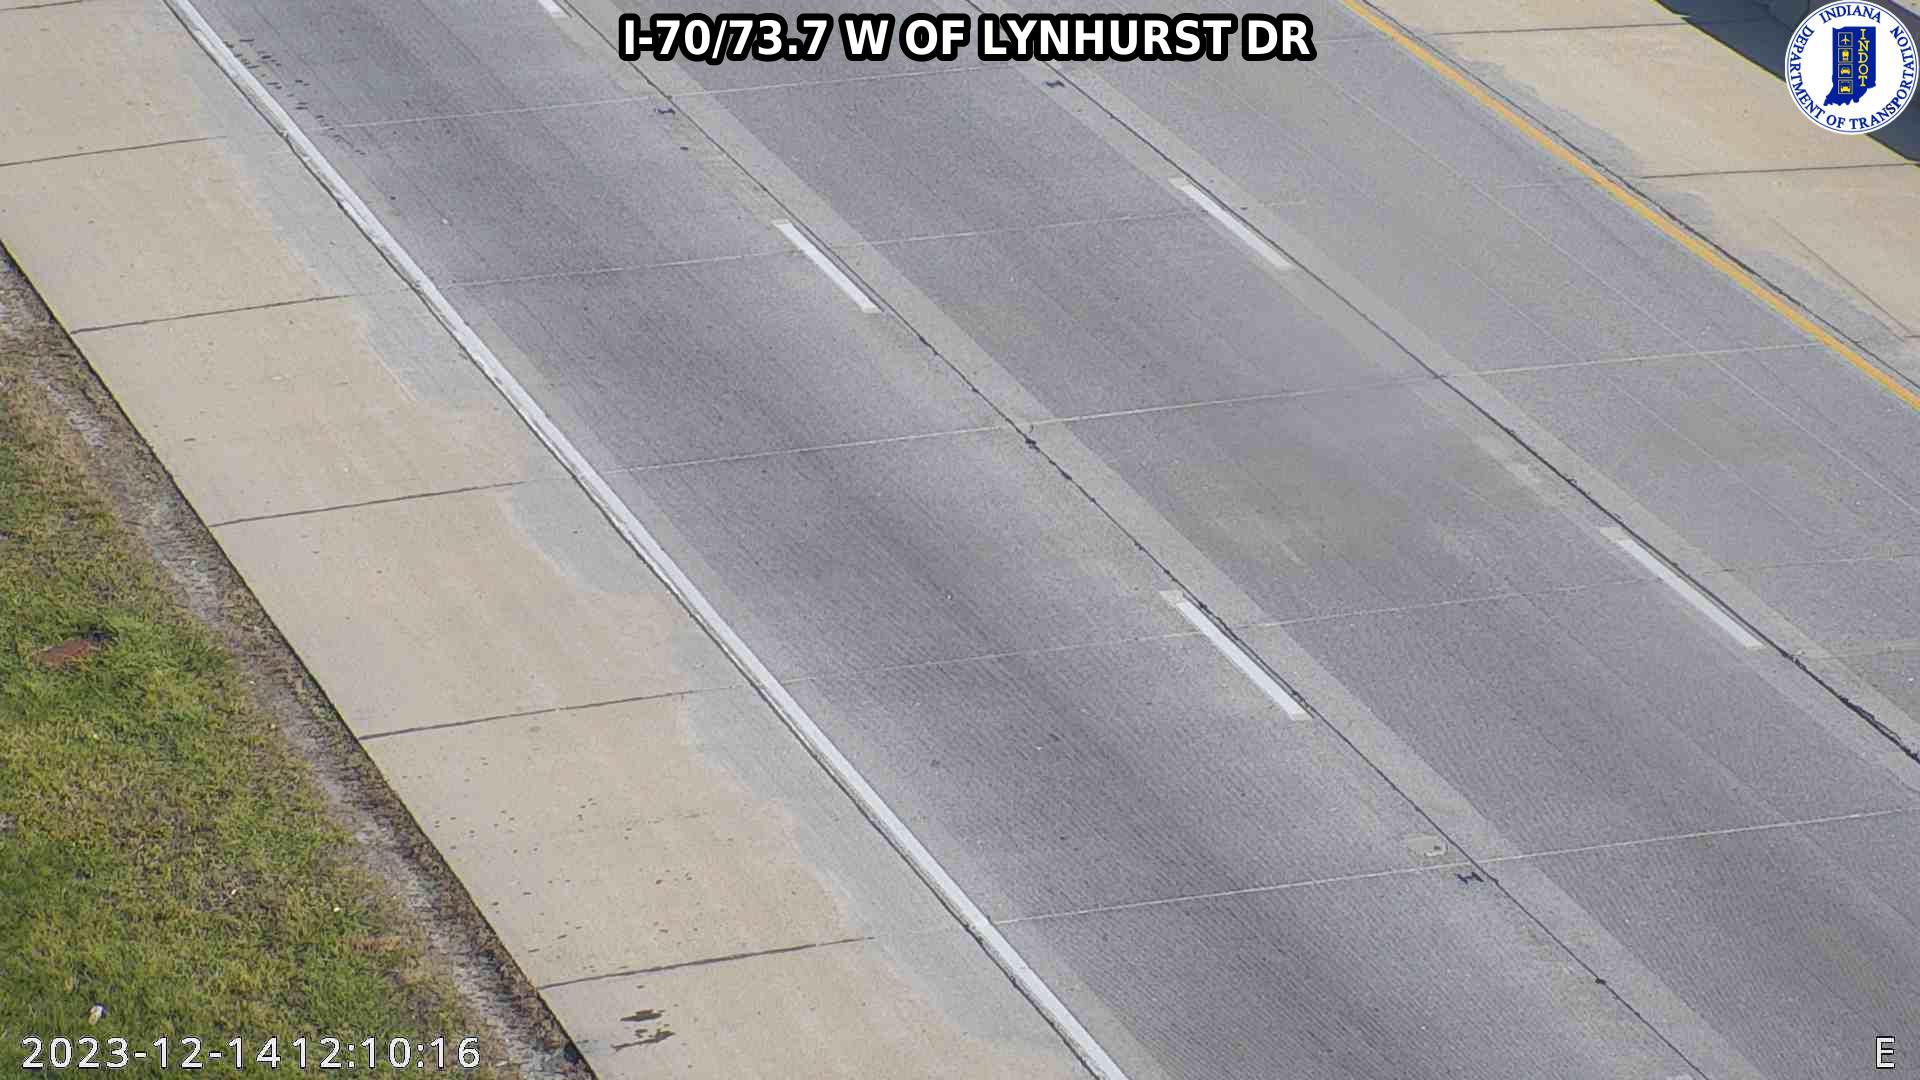 Traffic Cam Indianapolis: I-70: I-70/73.7 W OF LYNHURST DR